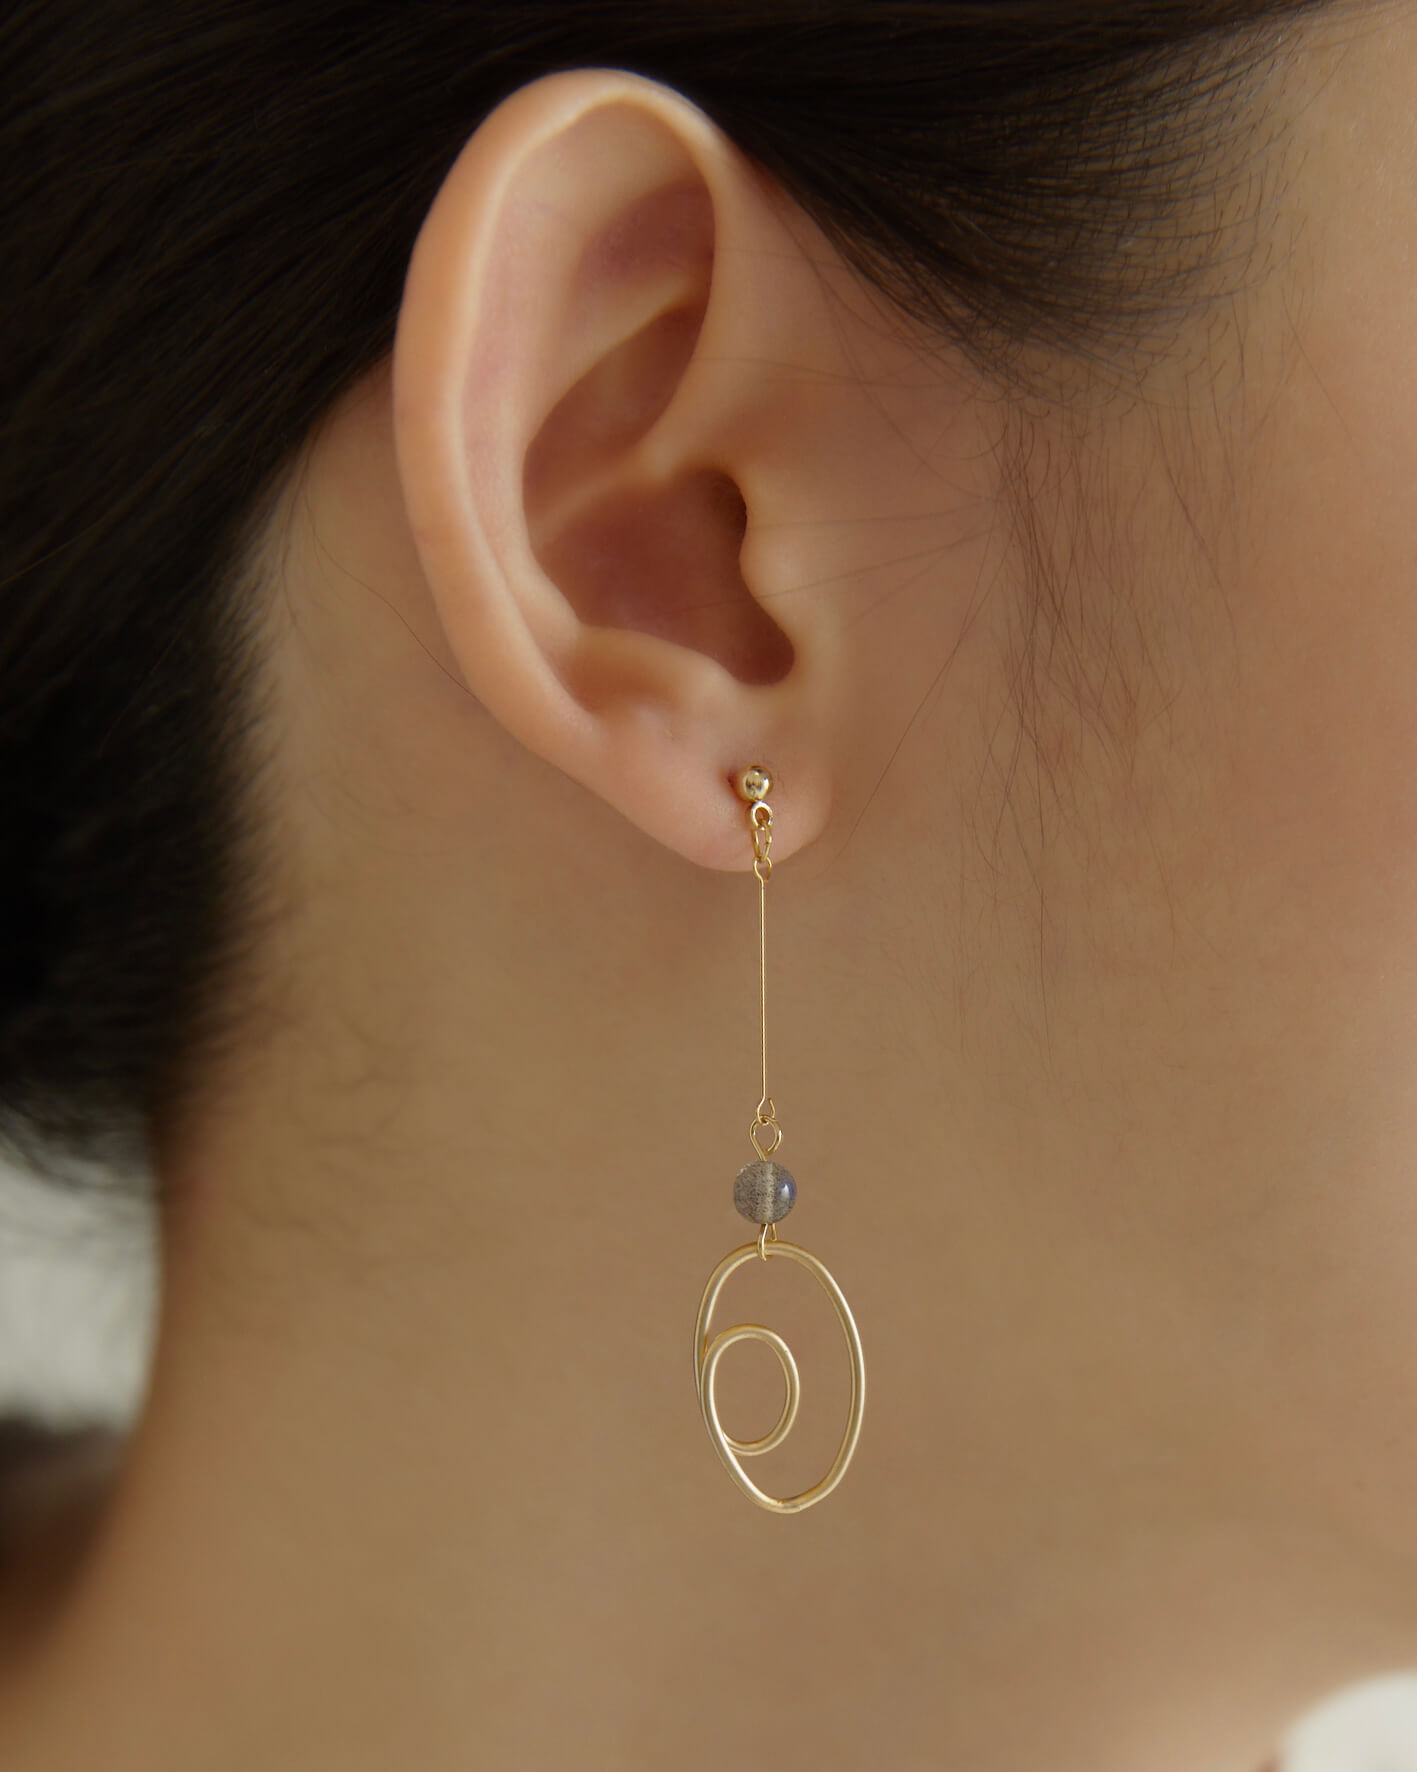 Eco安珂,韓國飾品,韓國耳環,耳針式耳環,不對稱耳環,天然石耳環,垂墜耳環